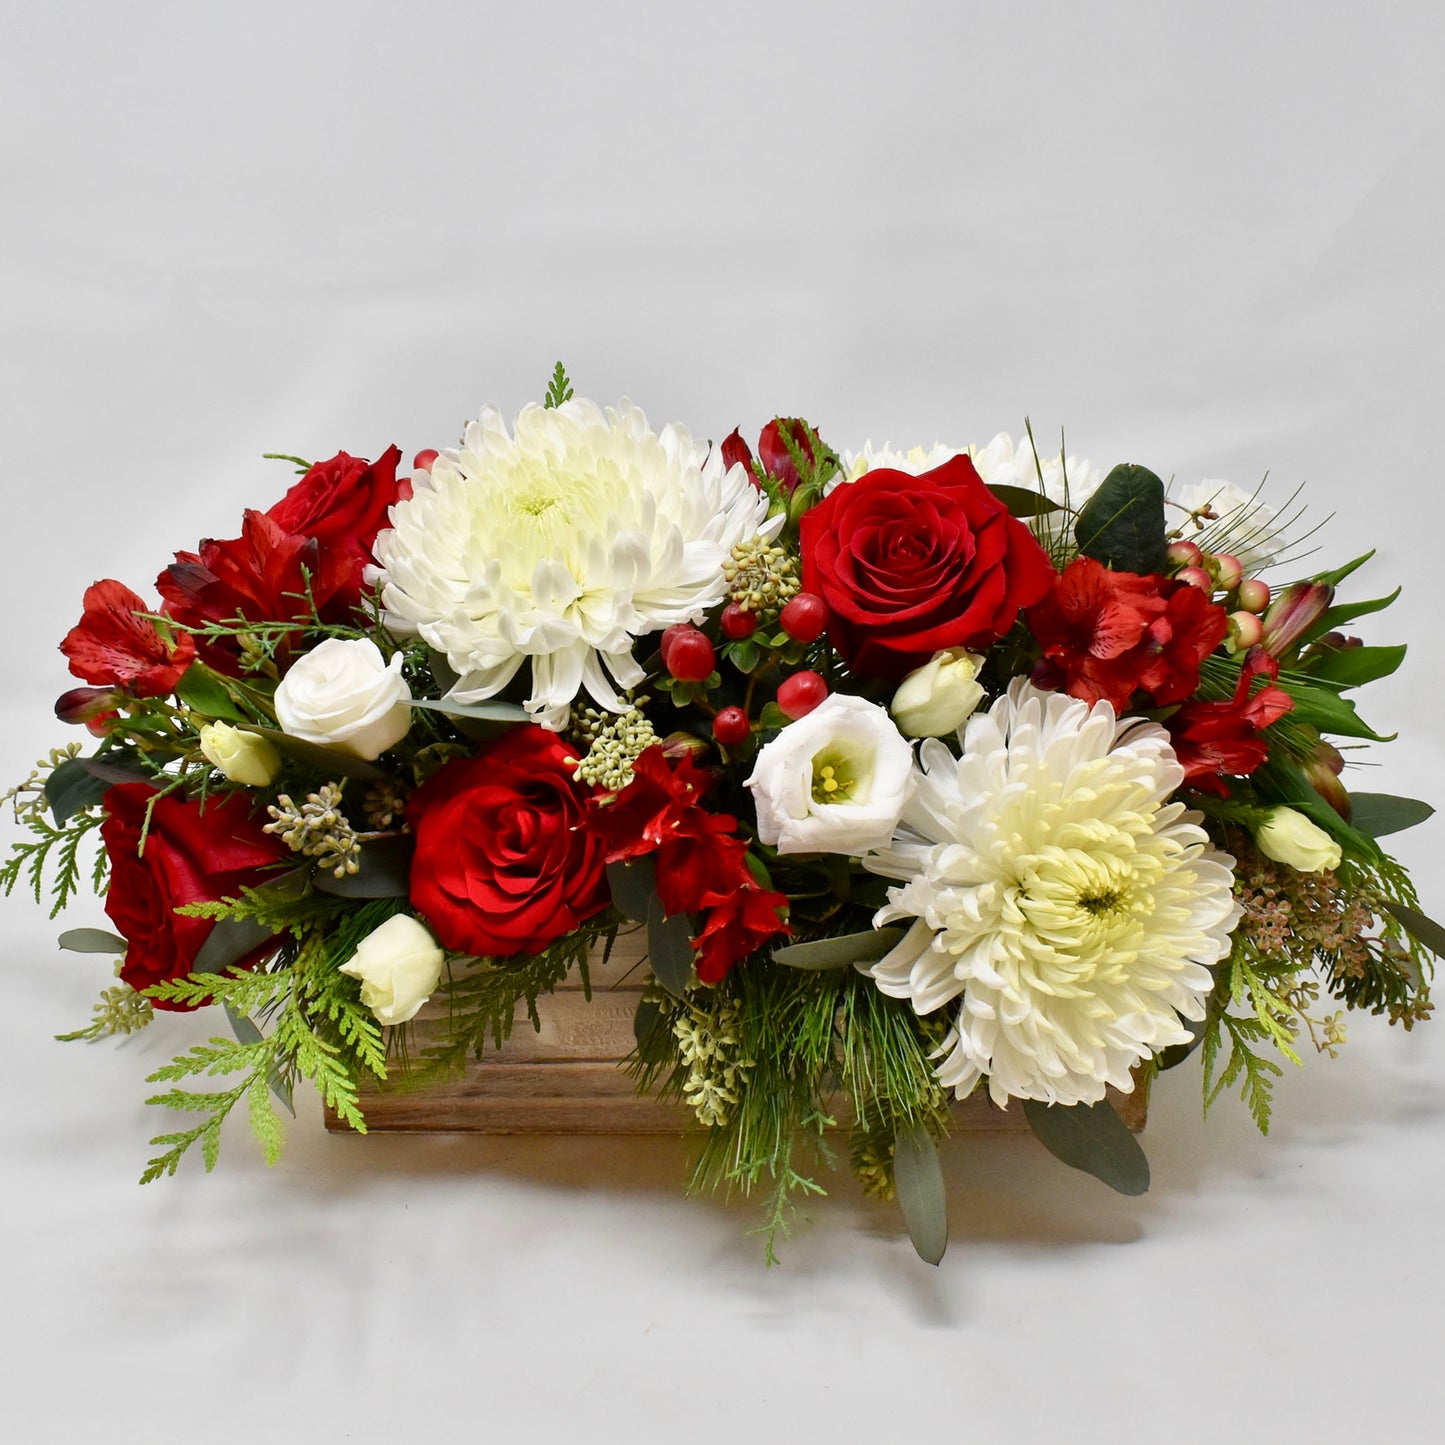 Festive Flower Box